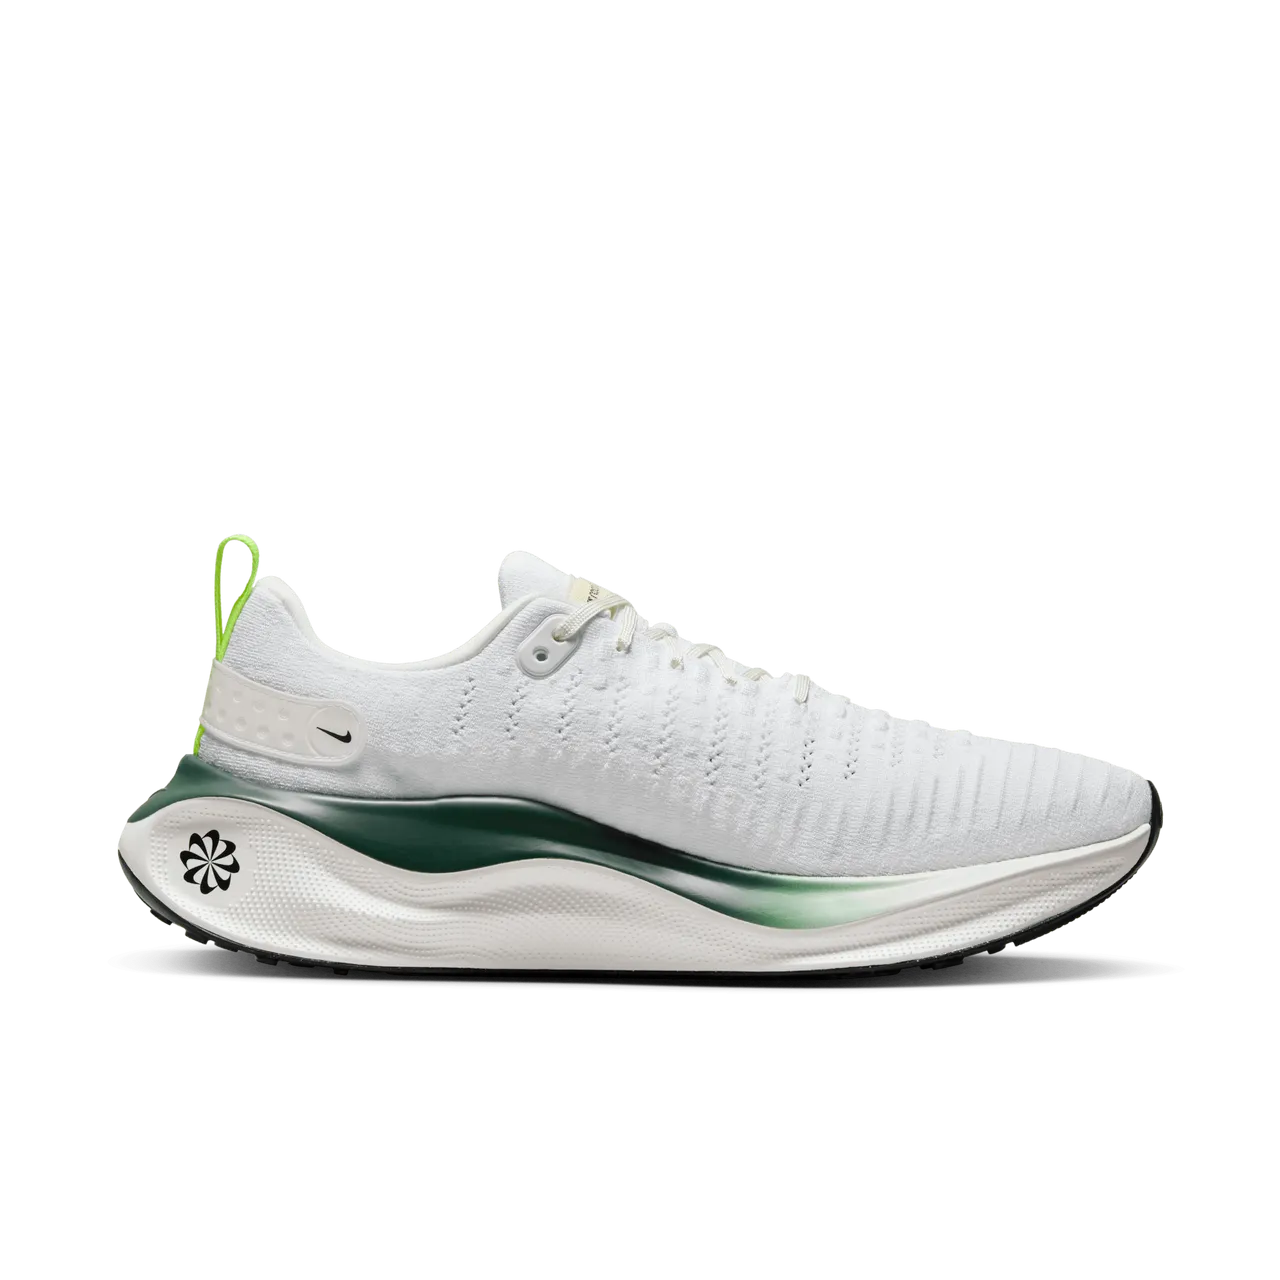 Nike InfinityRN 4 Men's Road Running Shoes - White